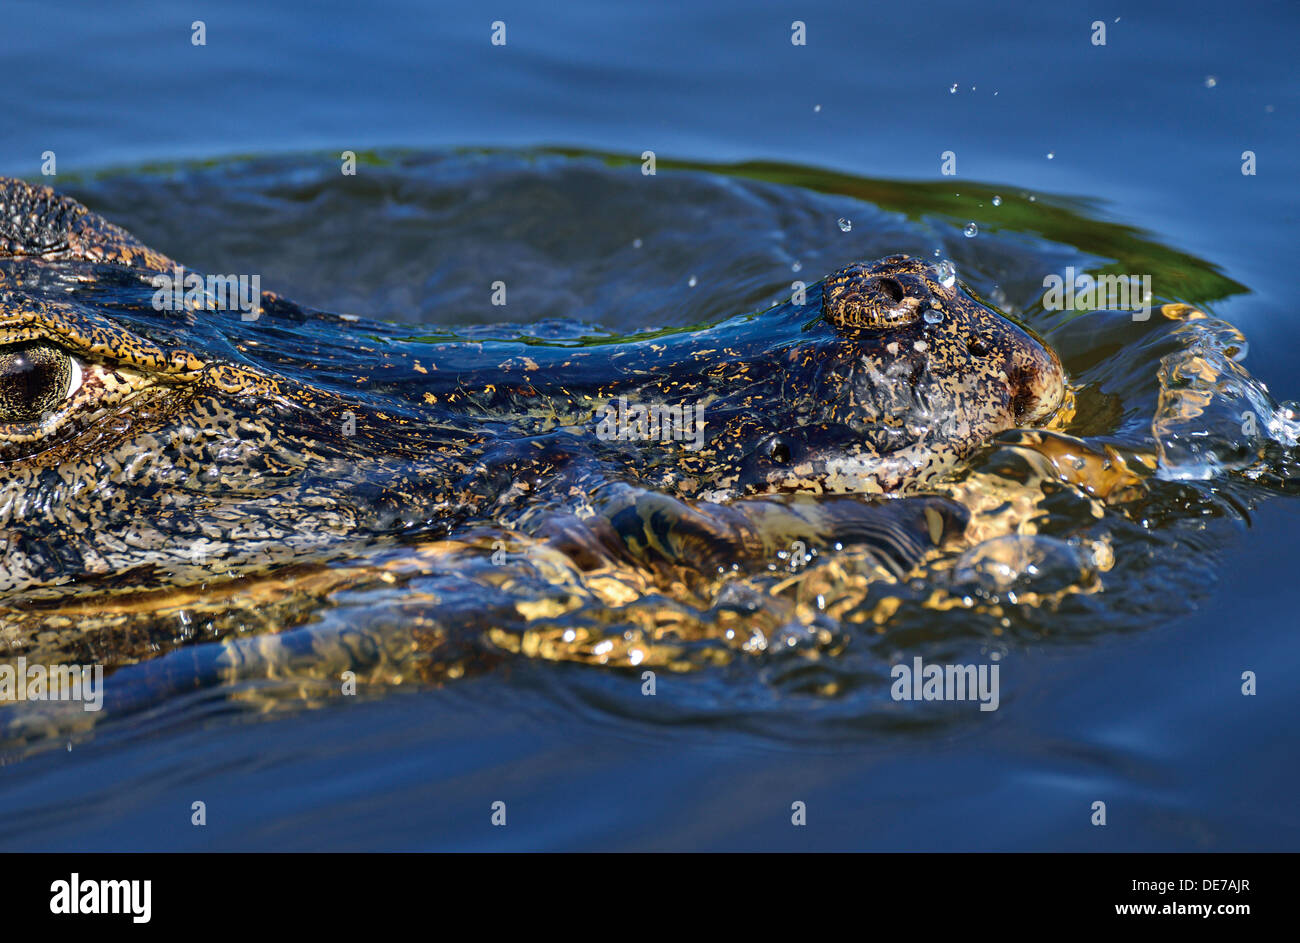 Brazil, Pantanal: Head of a yacare caiman (Caiman yacare) in the water Stock Photo